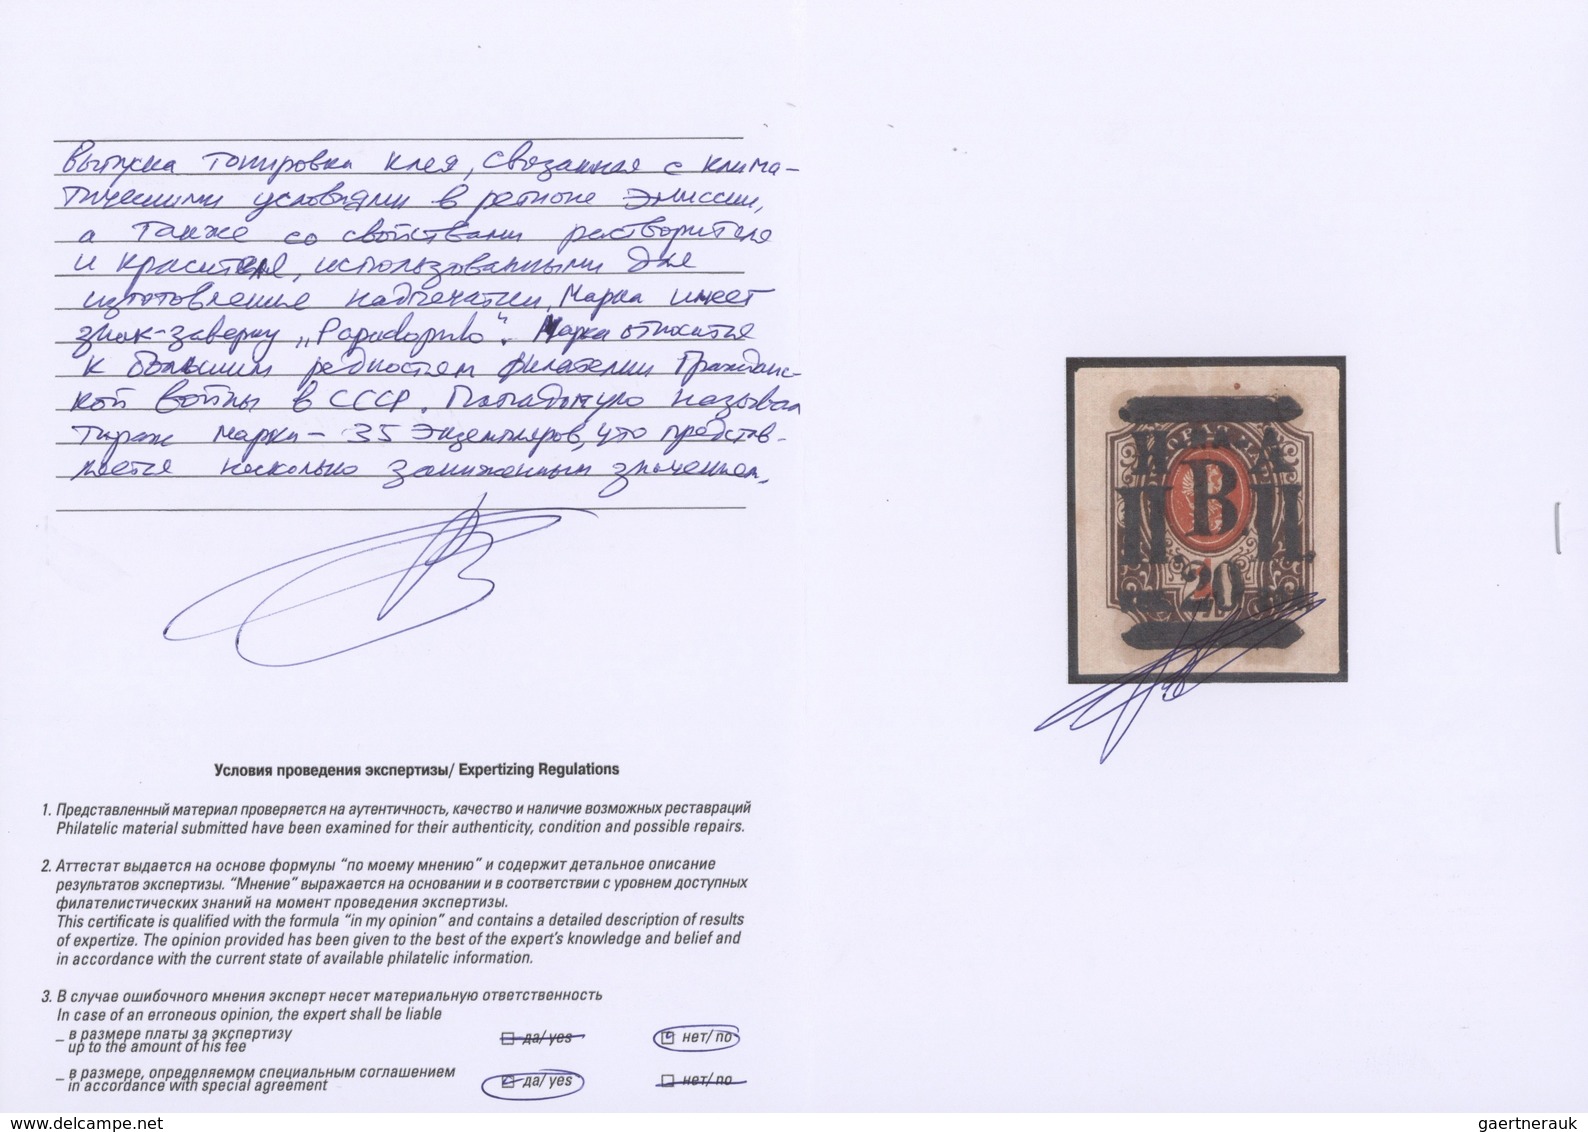 27927 Russland - Post der Bürgerkriegsgebiete: Nikolajewsk / Amur / Priamur: 1921. Virtually complete set